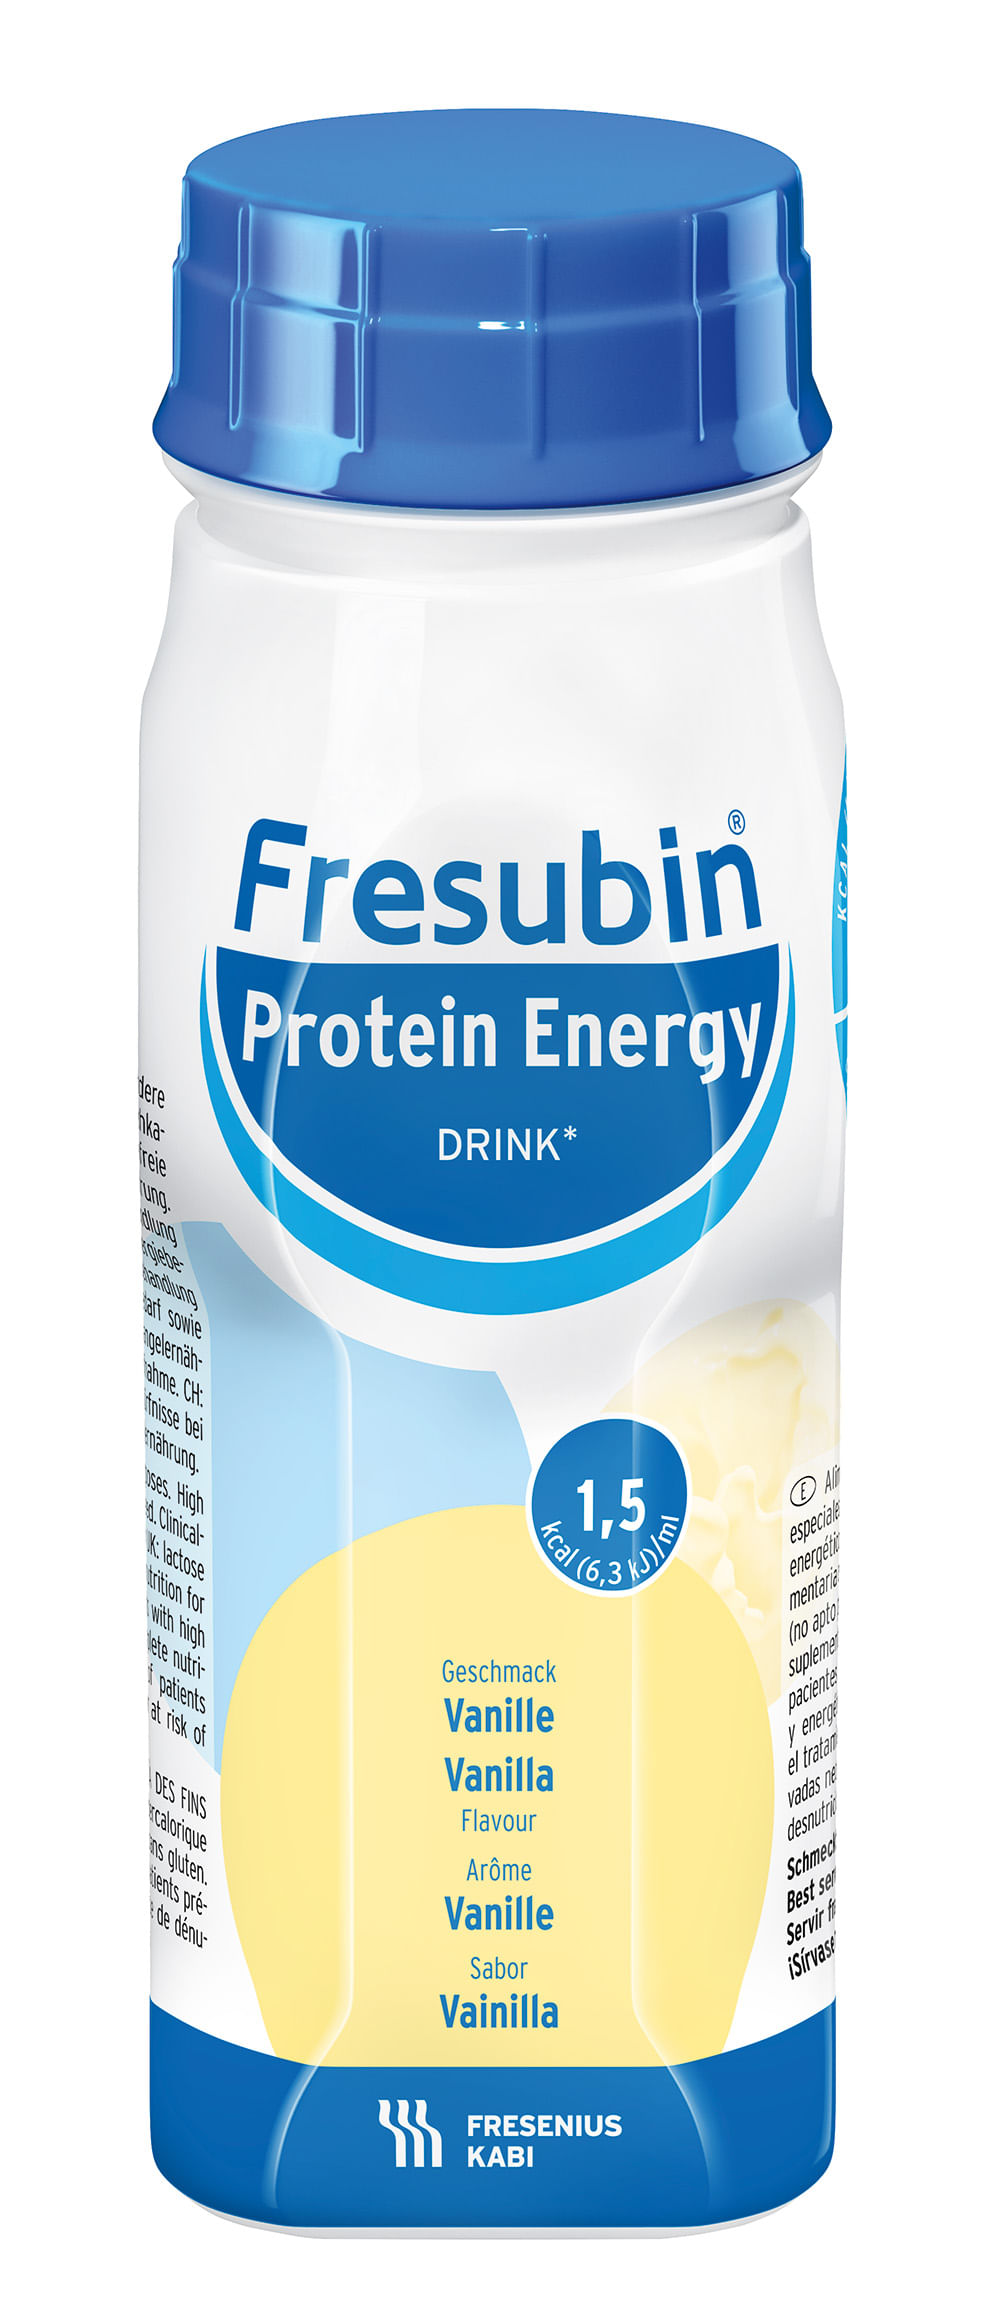 Fresubin_Protein_Energy_Vanilla_EBo_Frontal